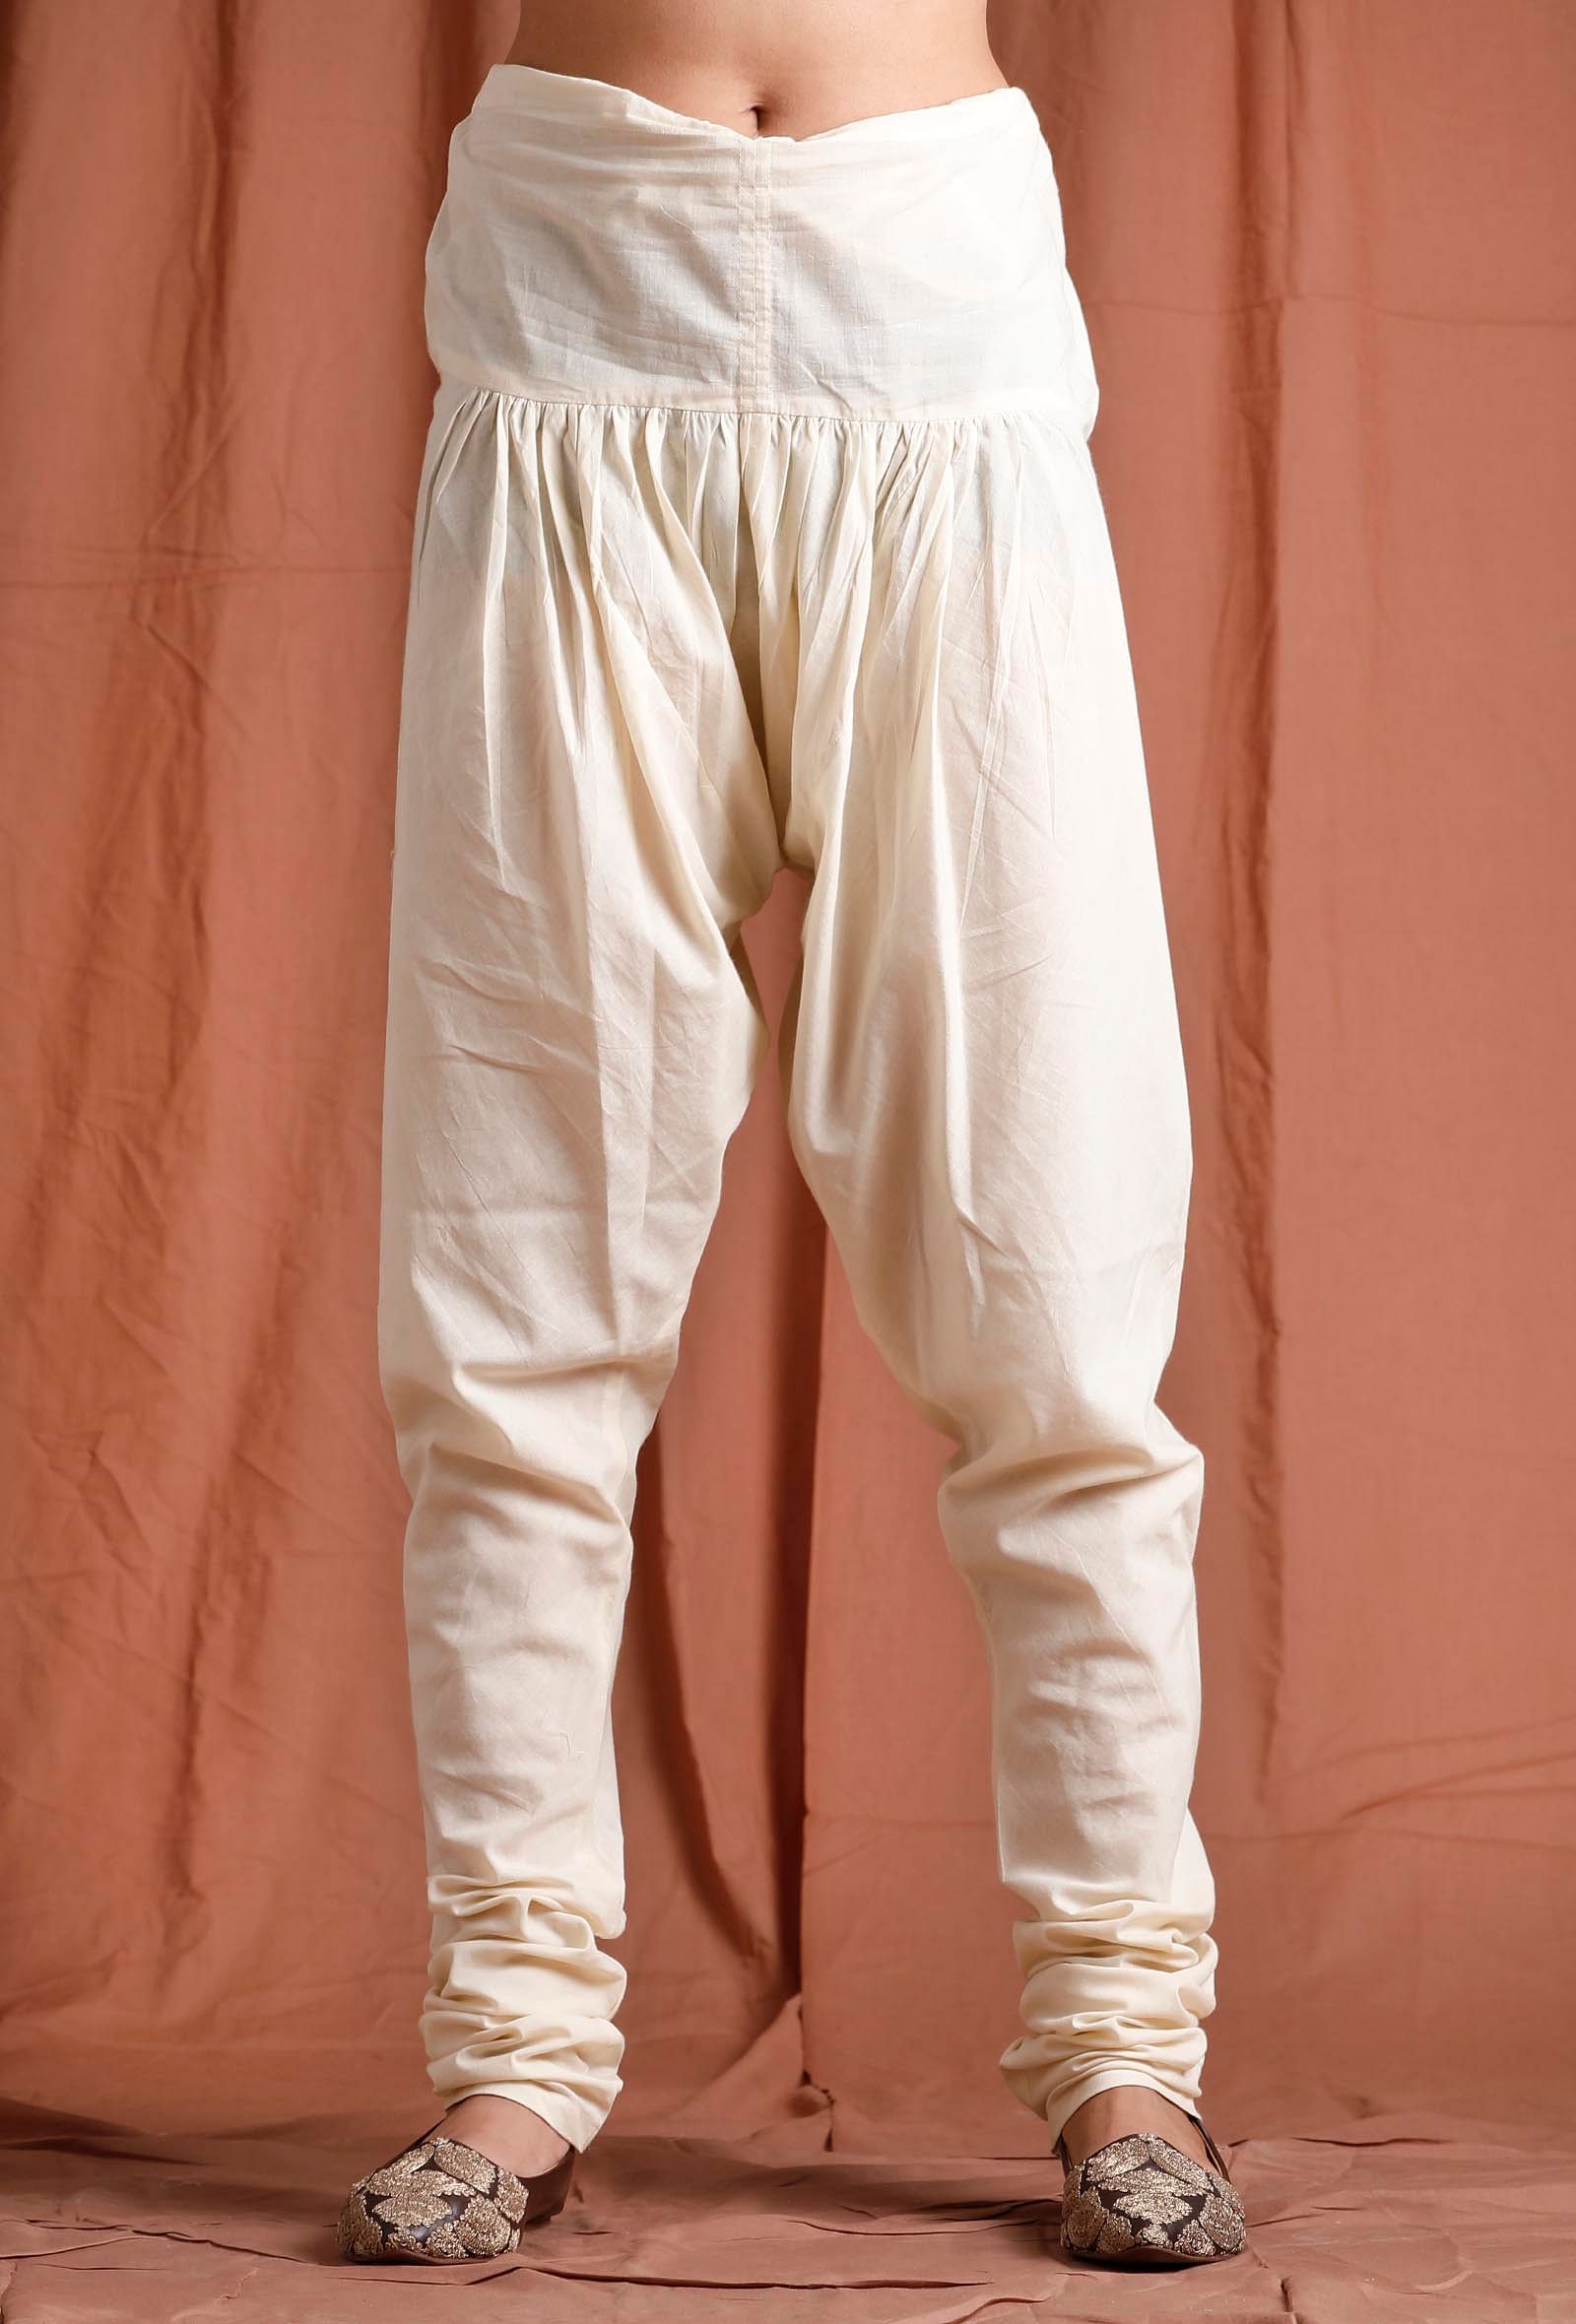 Black Poly Viscose Printed Churidar Pants Design by S&N by Shantnu Nikhil  Men at Pernia's Pop Up Shop 2024